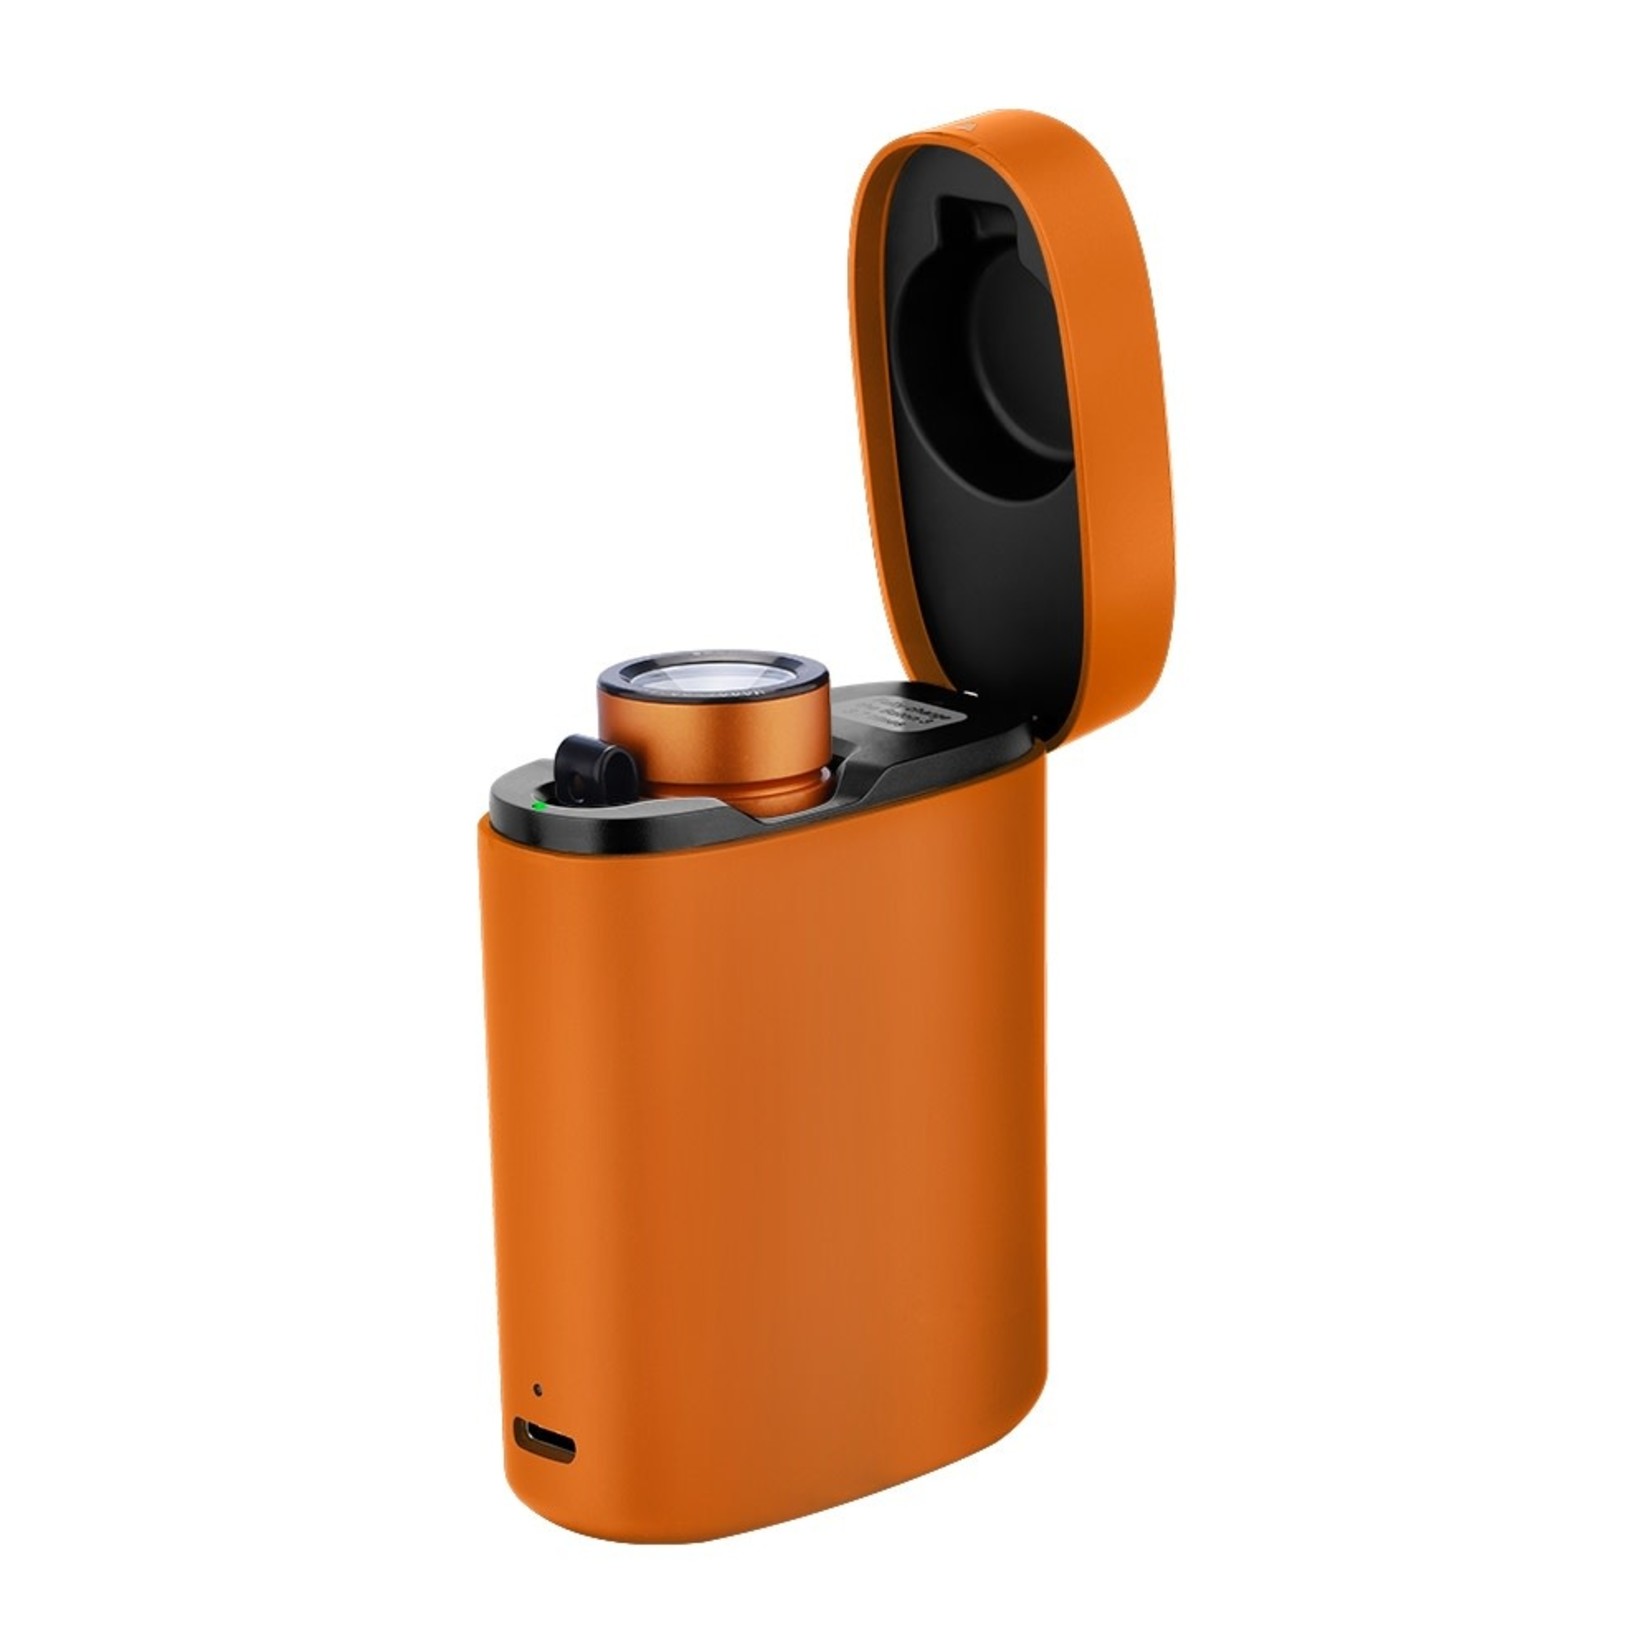 Olight Olight Baton 3 Premium Kit Limited Edition Orange